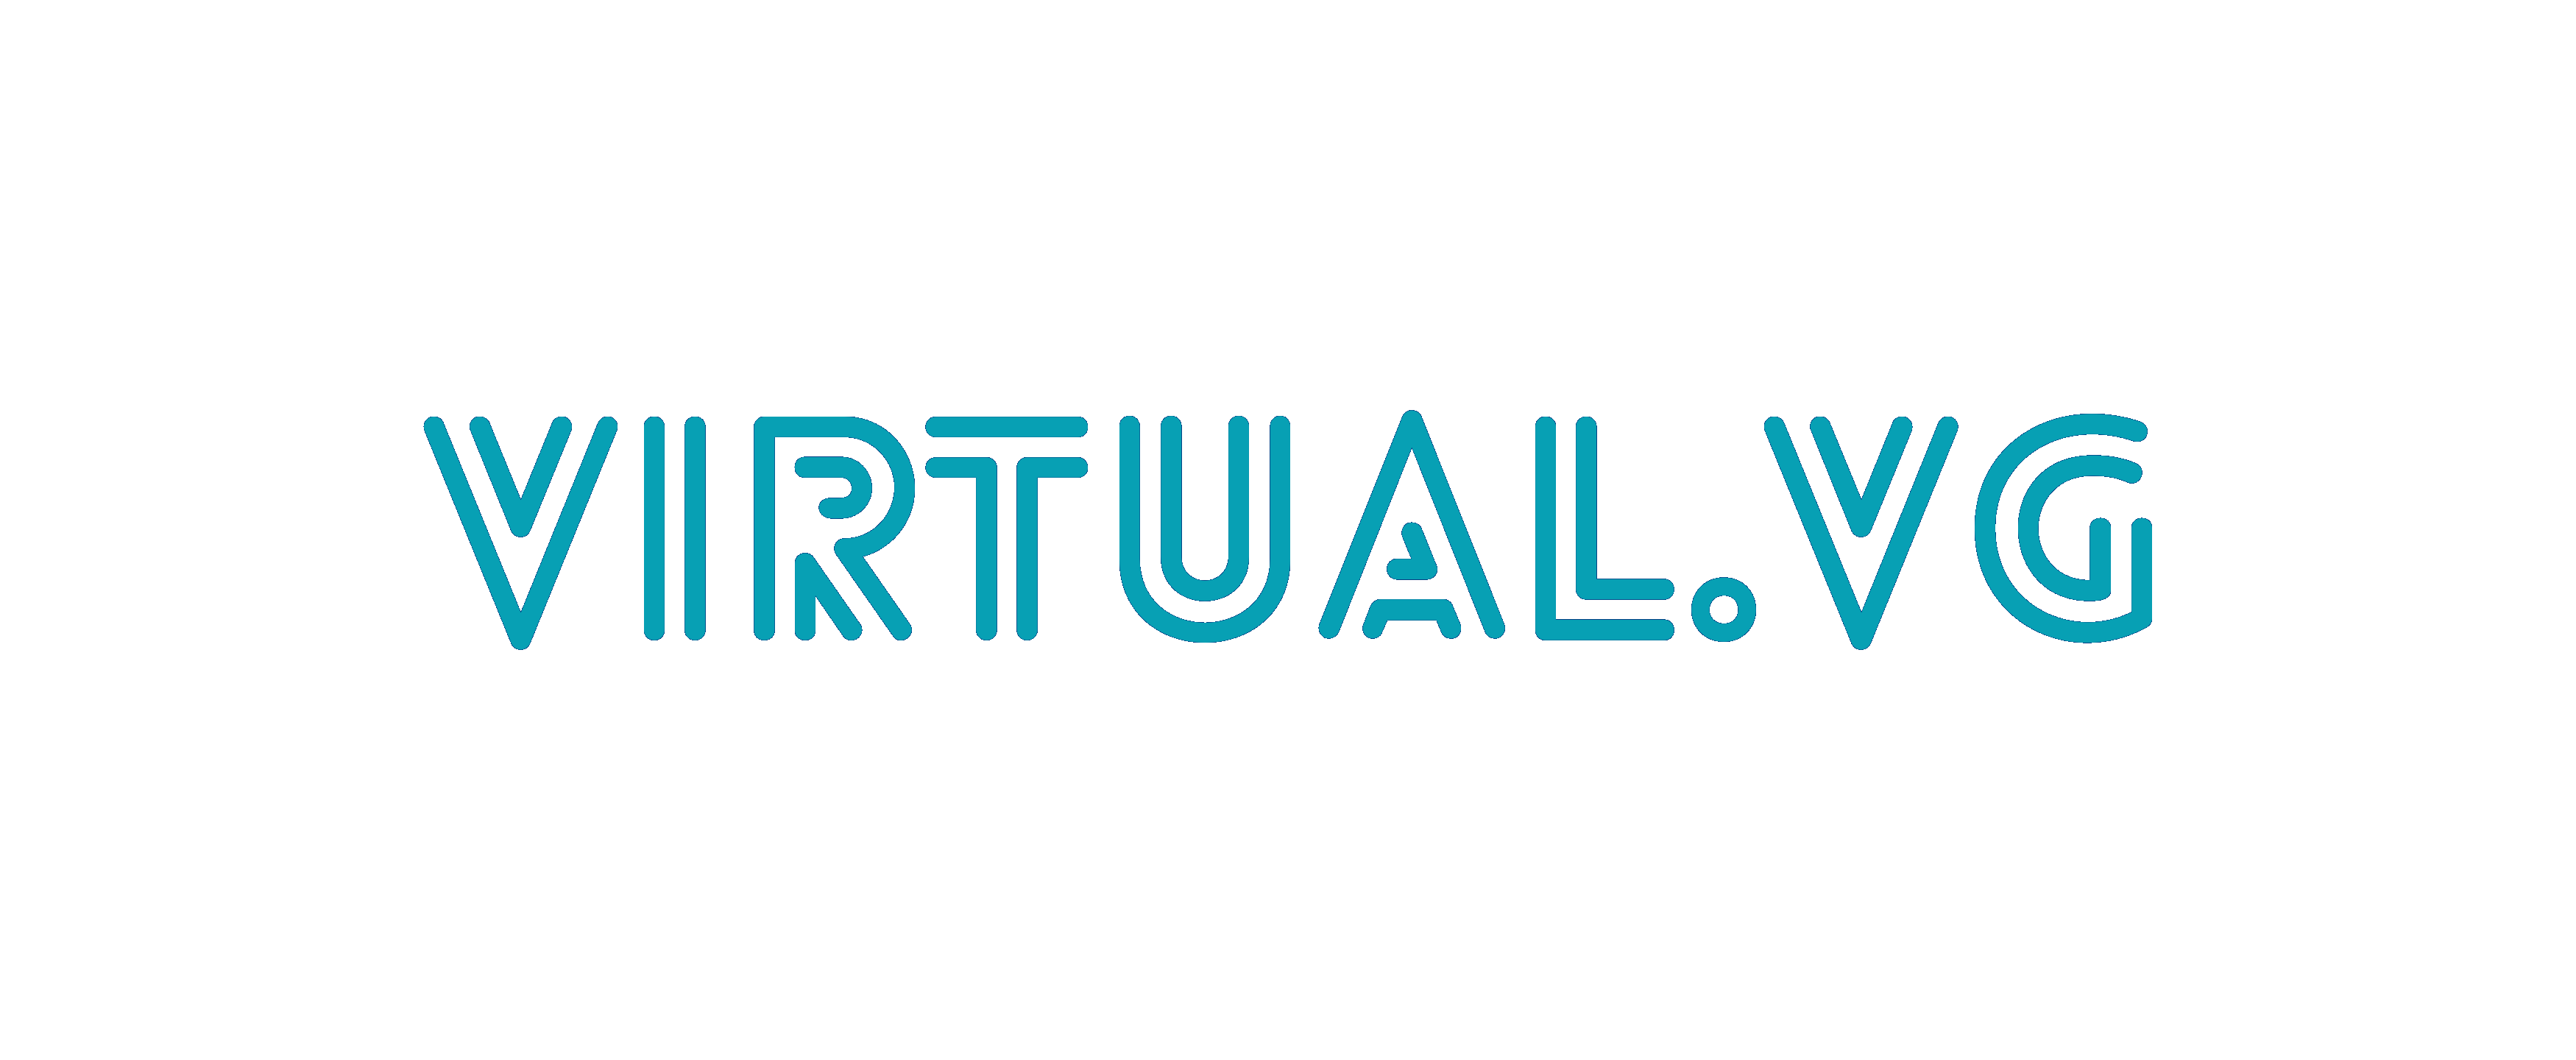 Virtual.vg